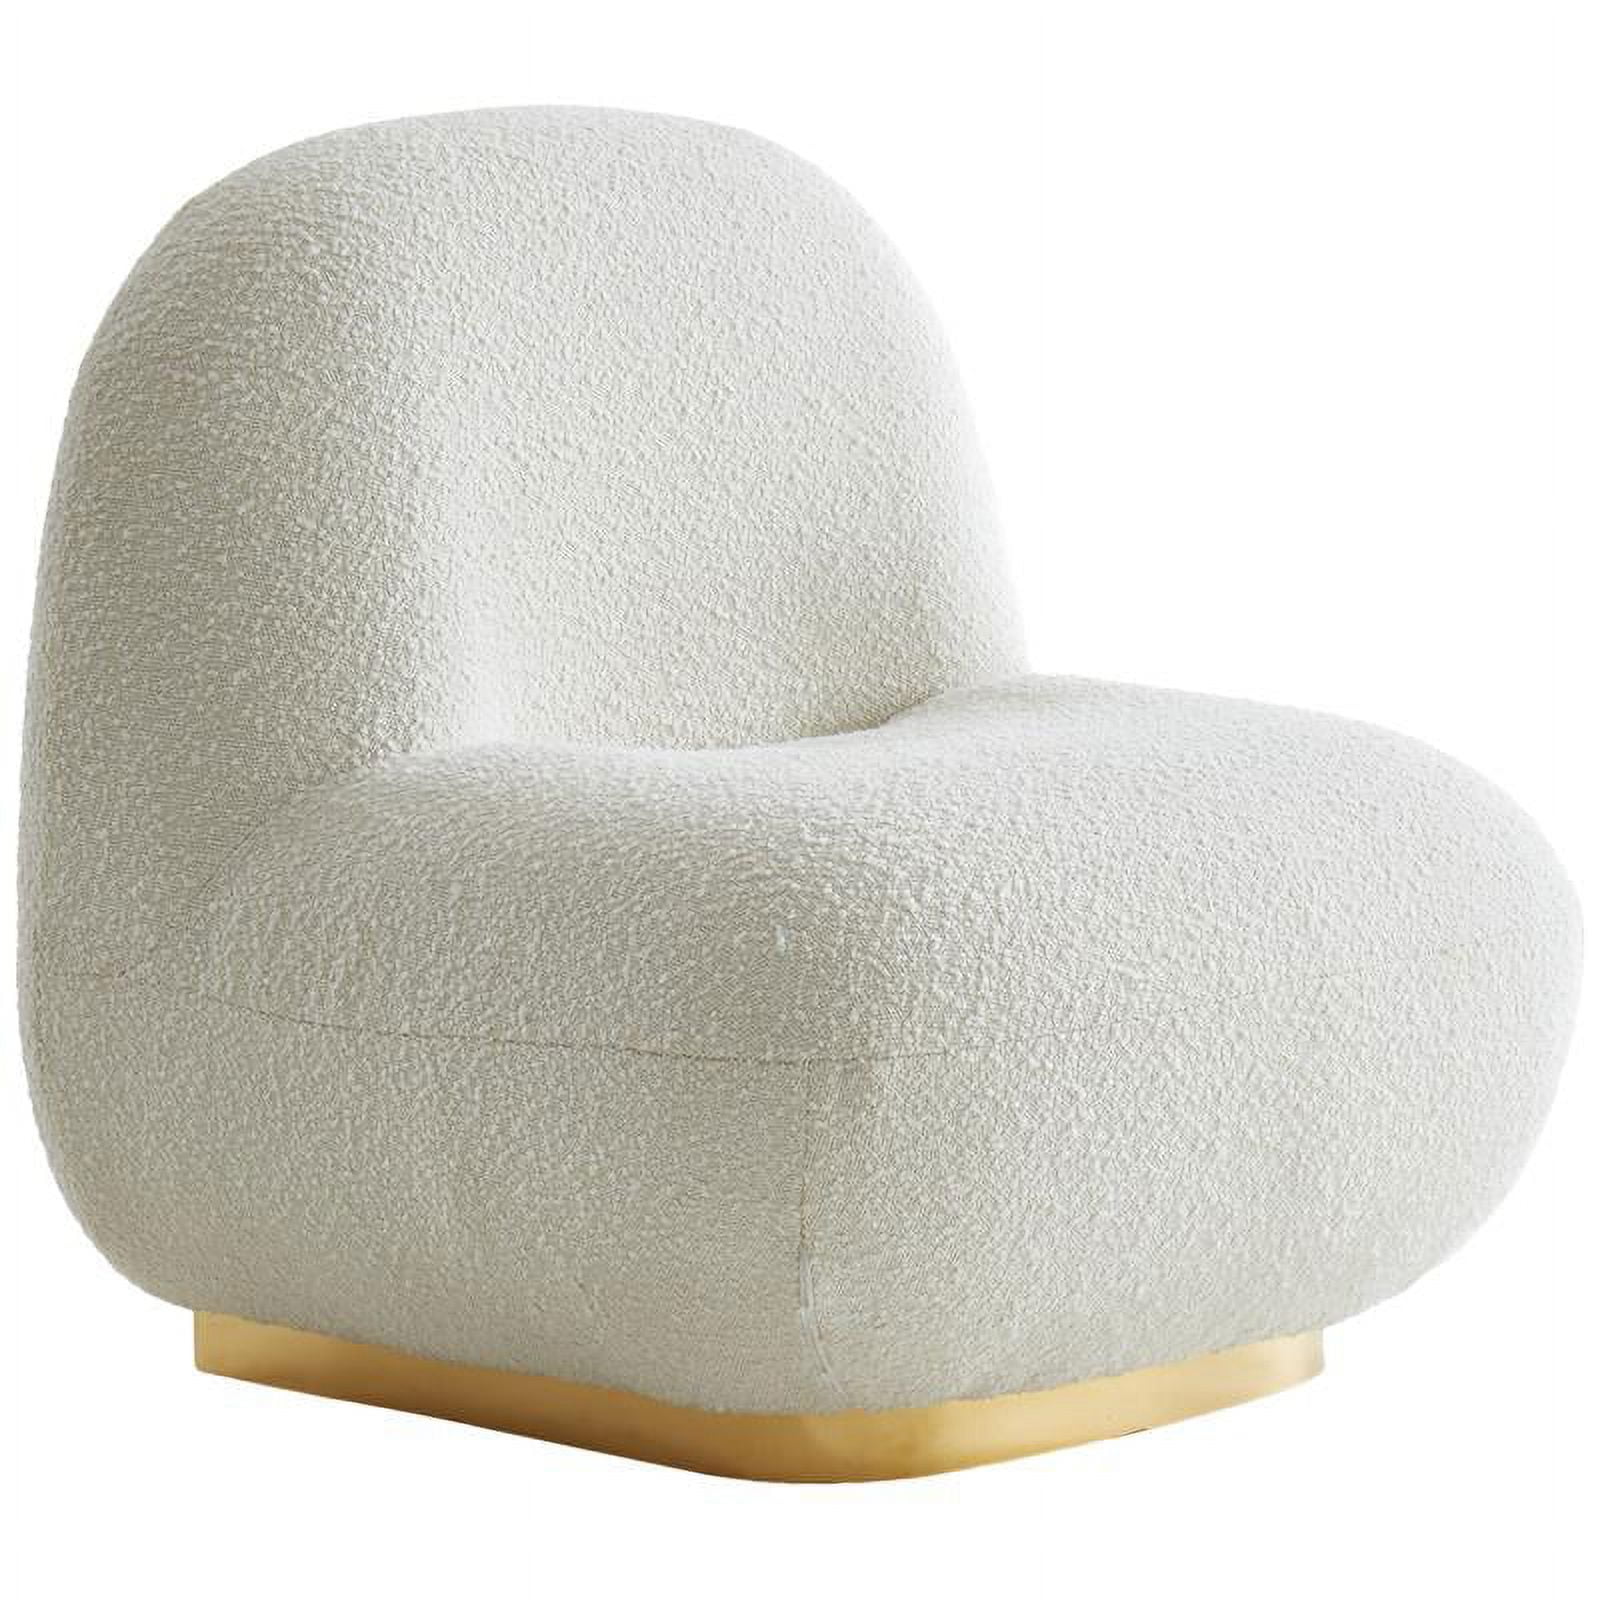 Cream Boucle – Linen + Cloth